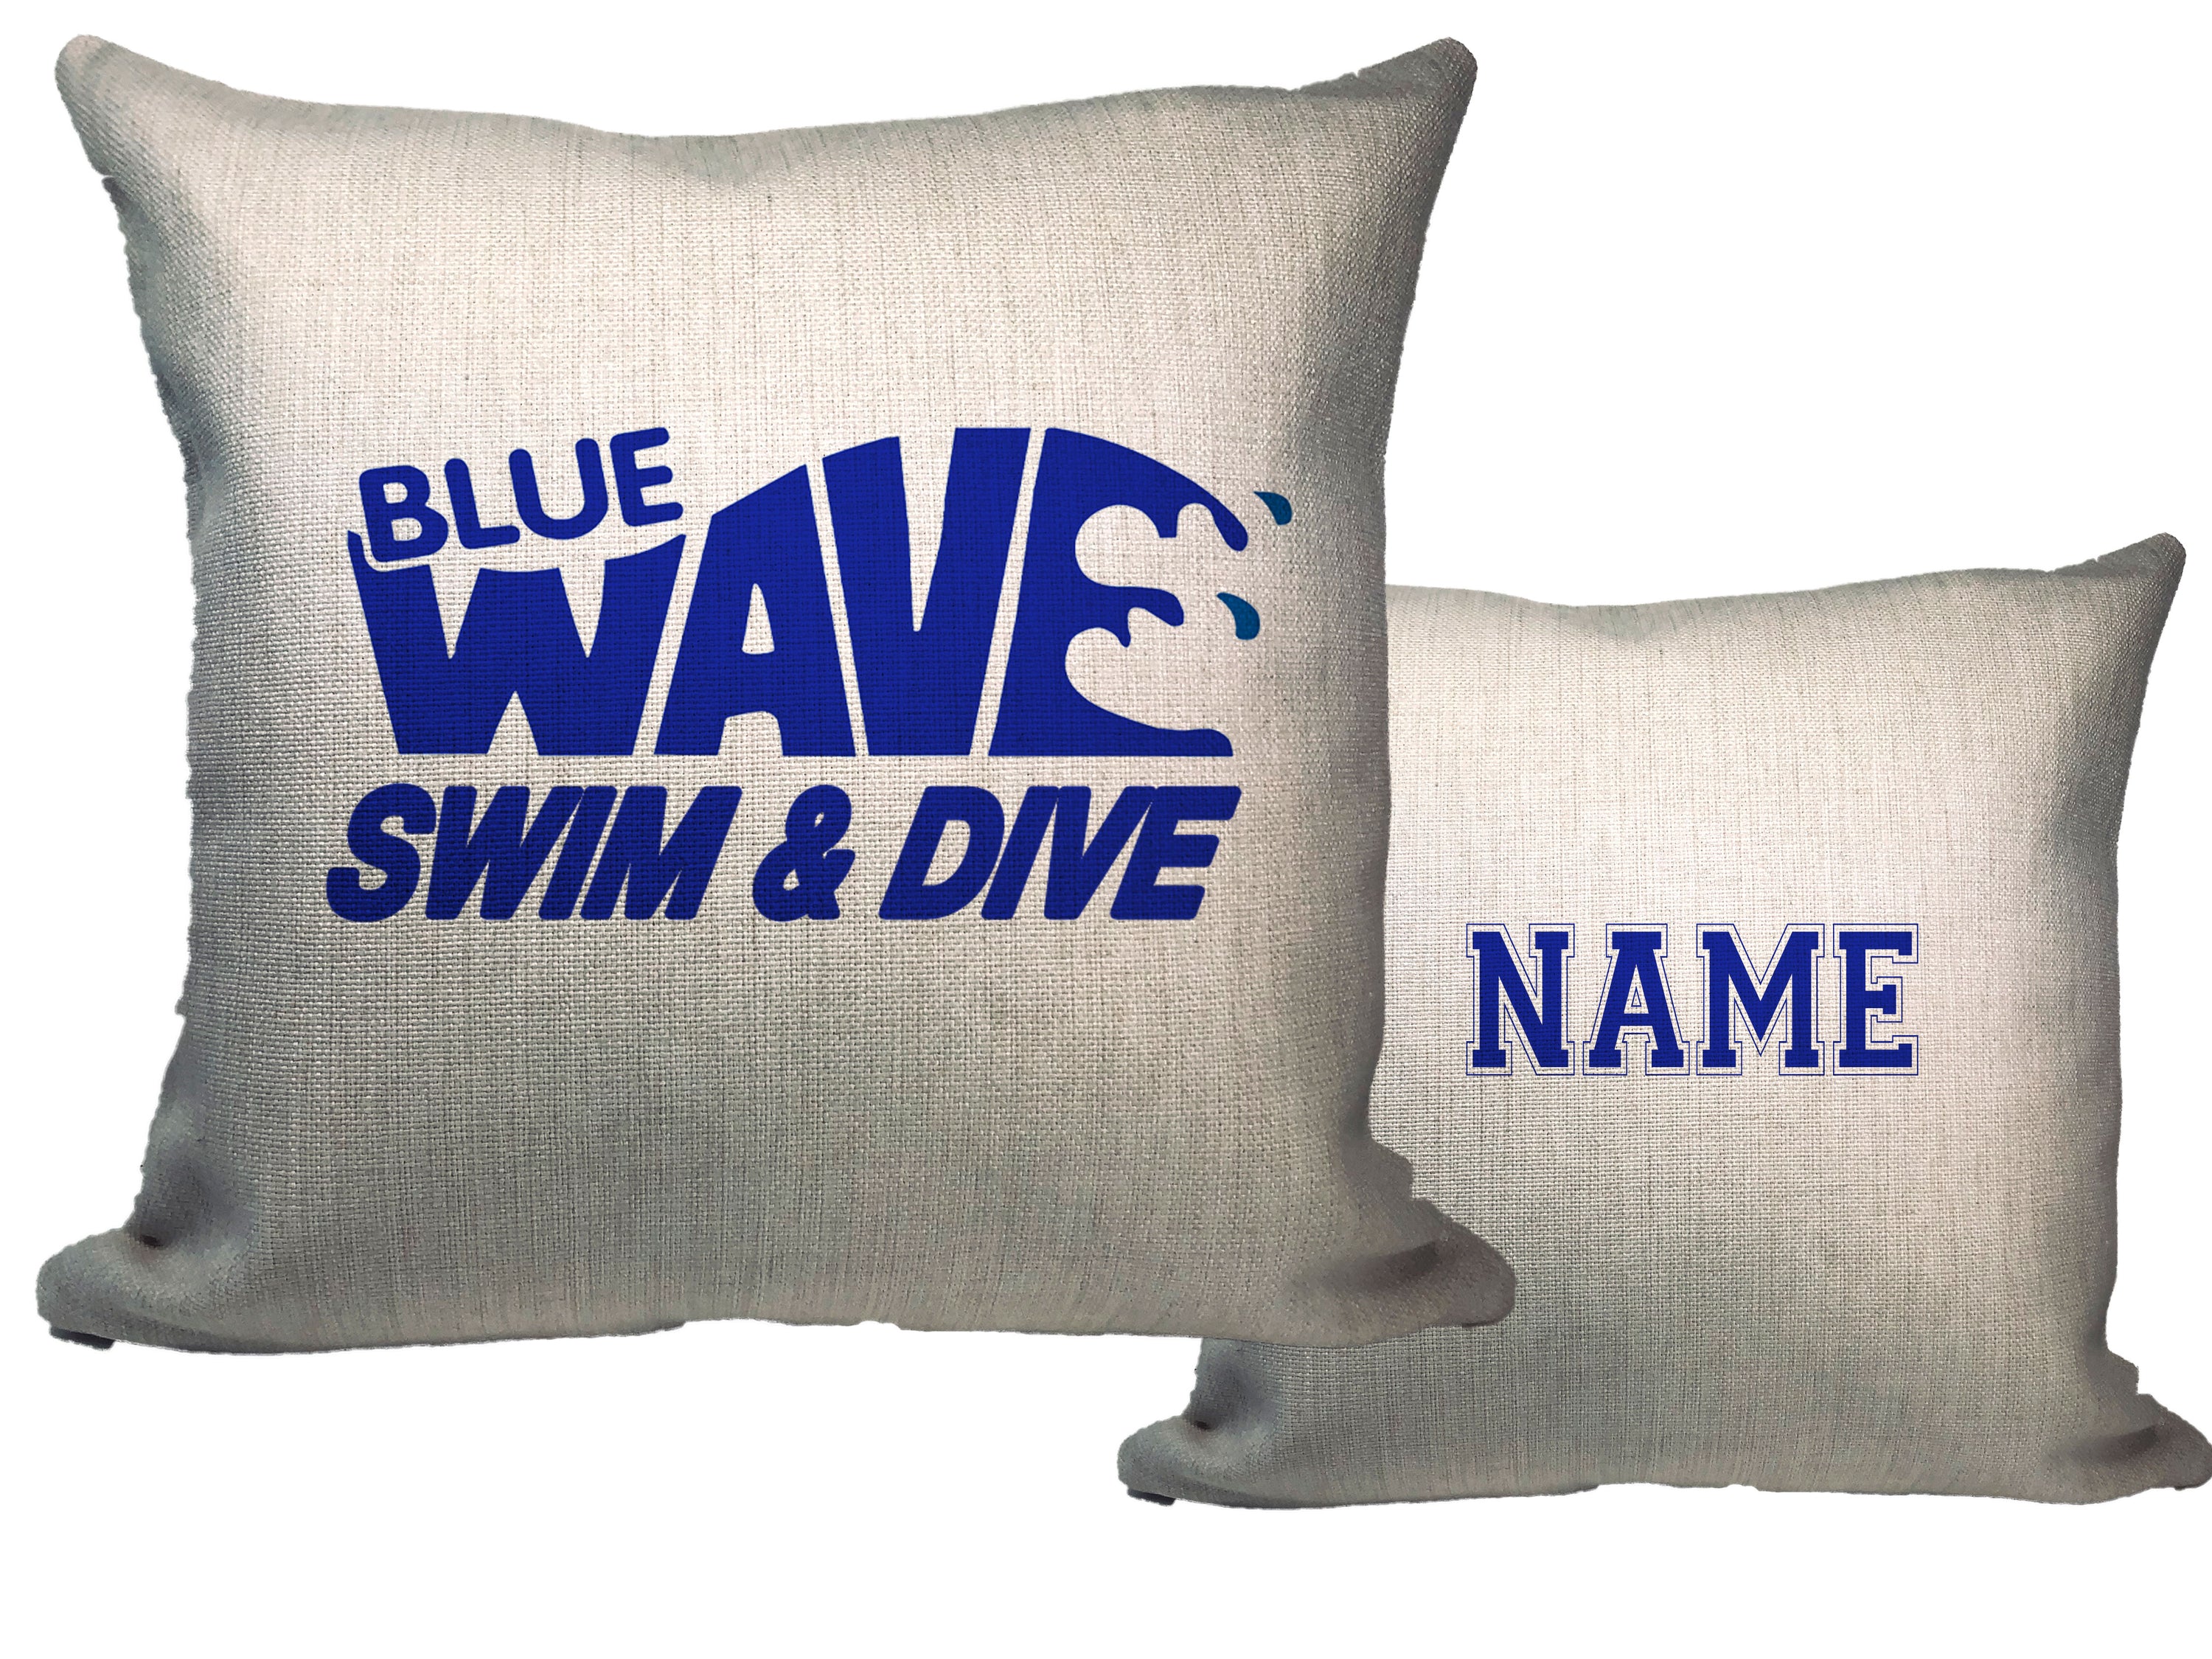 Blue Wave Swim & Dive Throw Pillow - Name